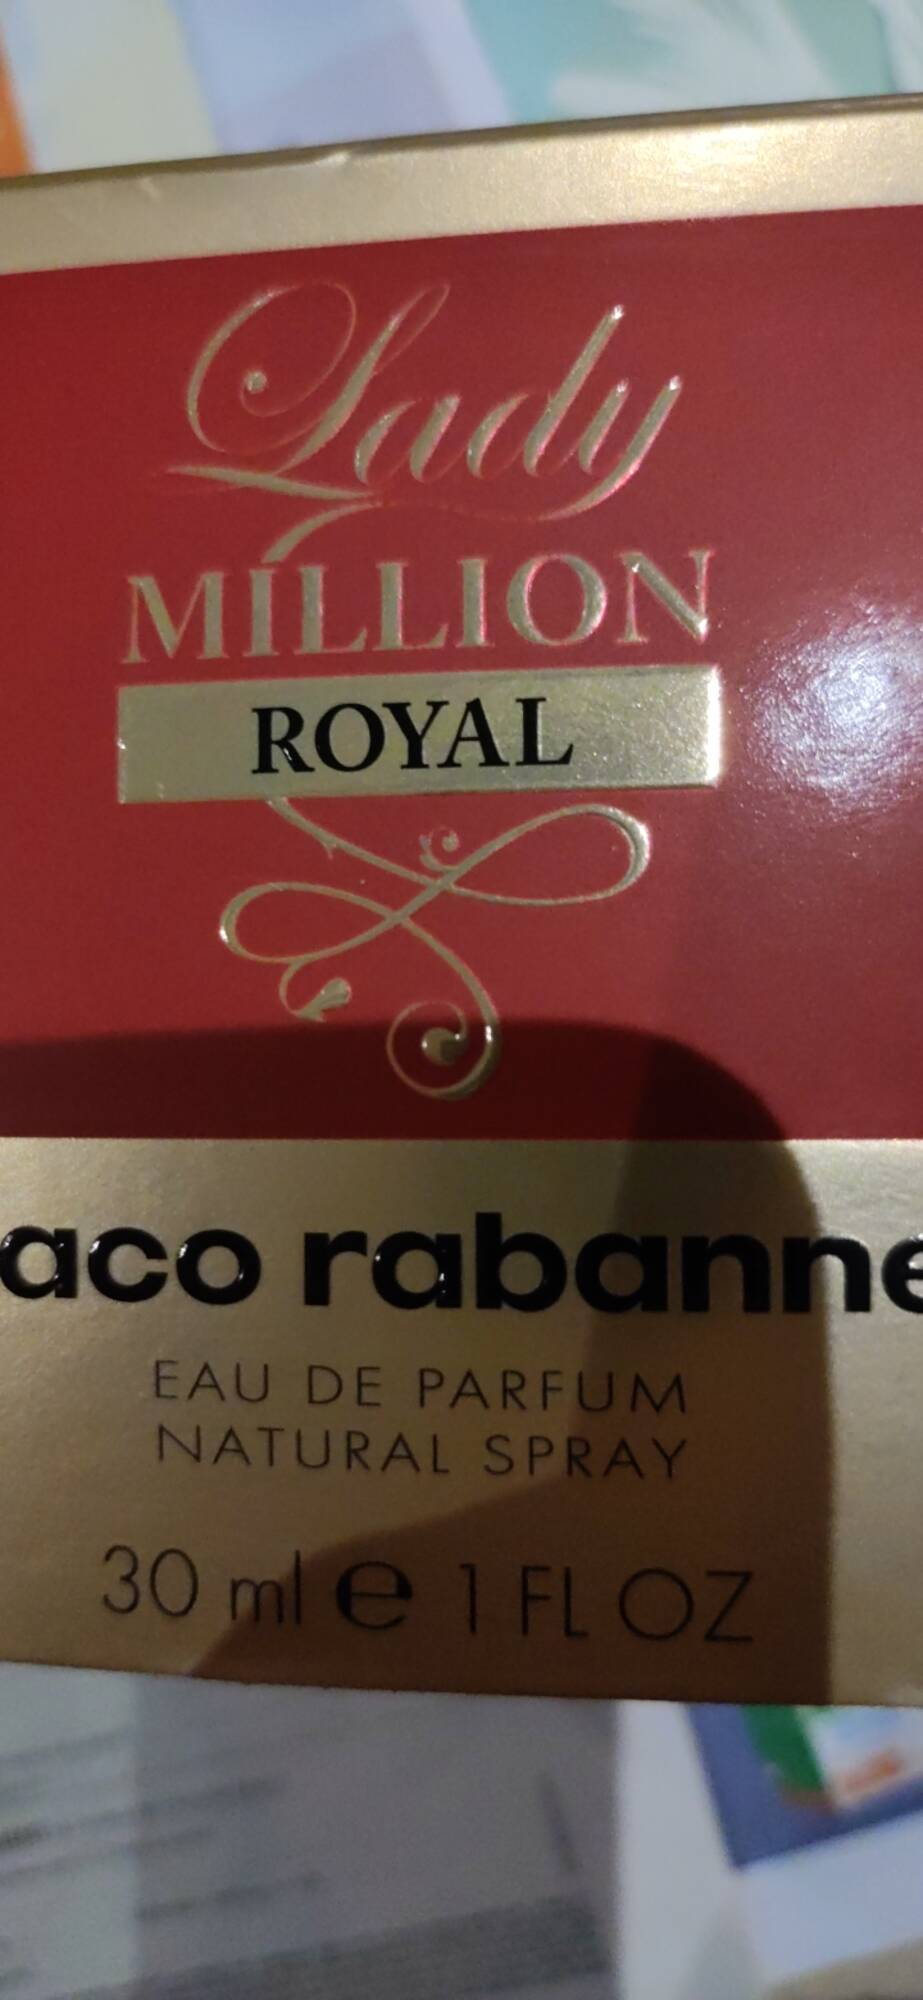 PACO RABANNE - Lady million royal 